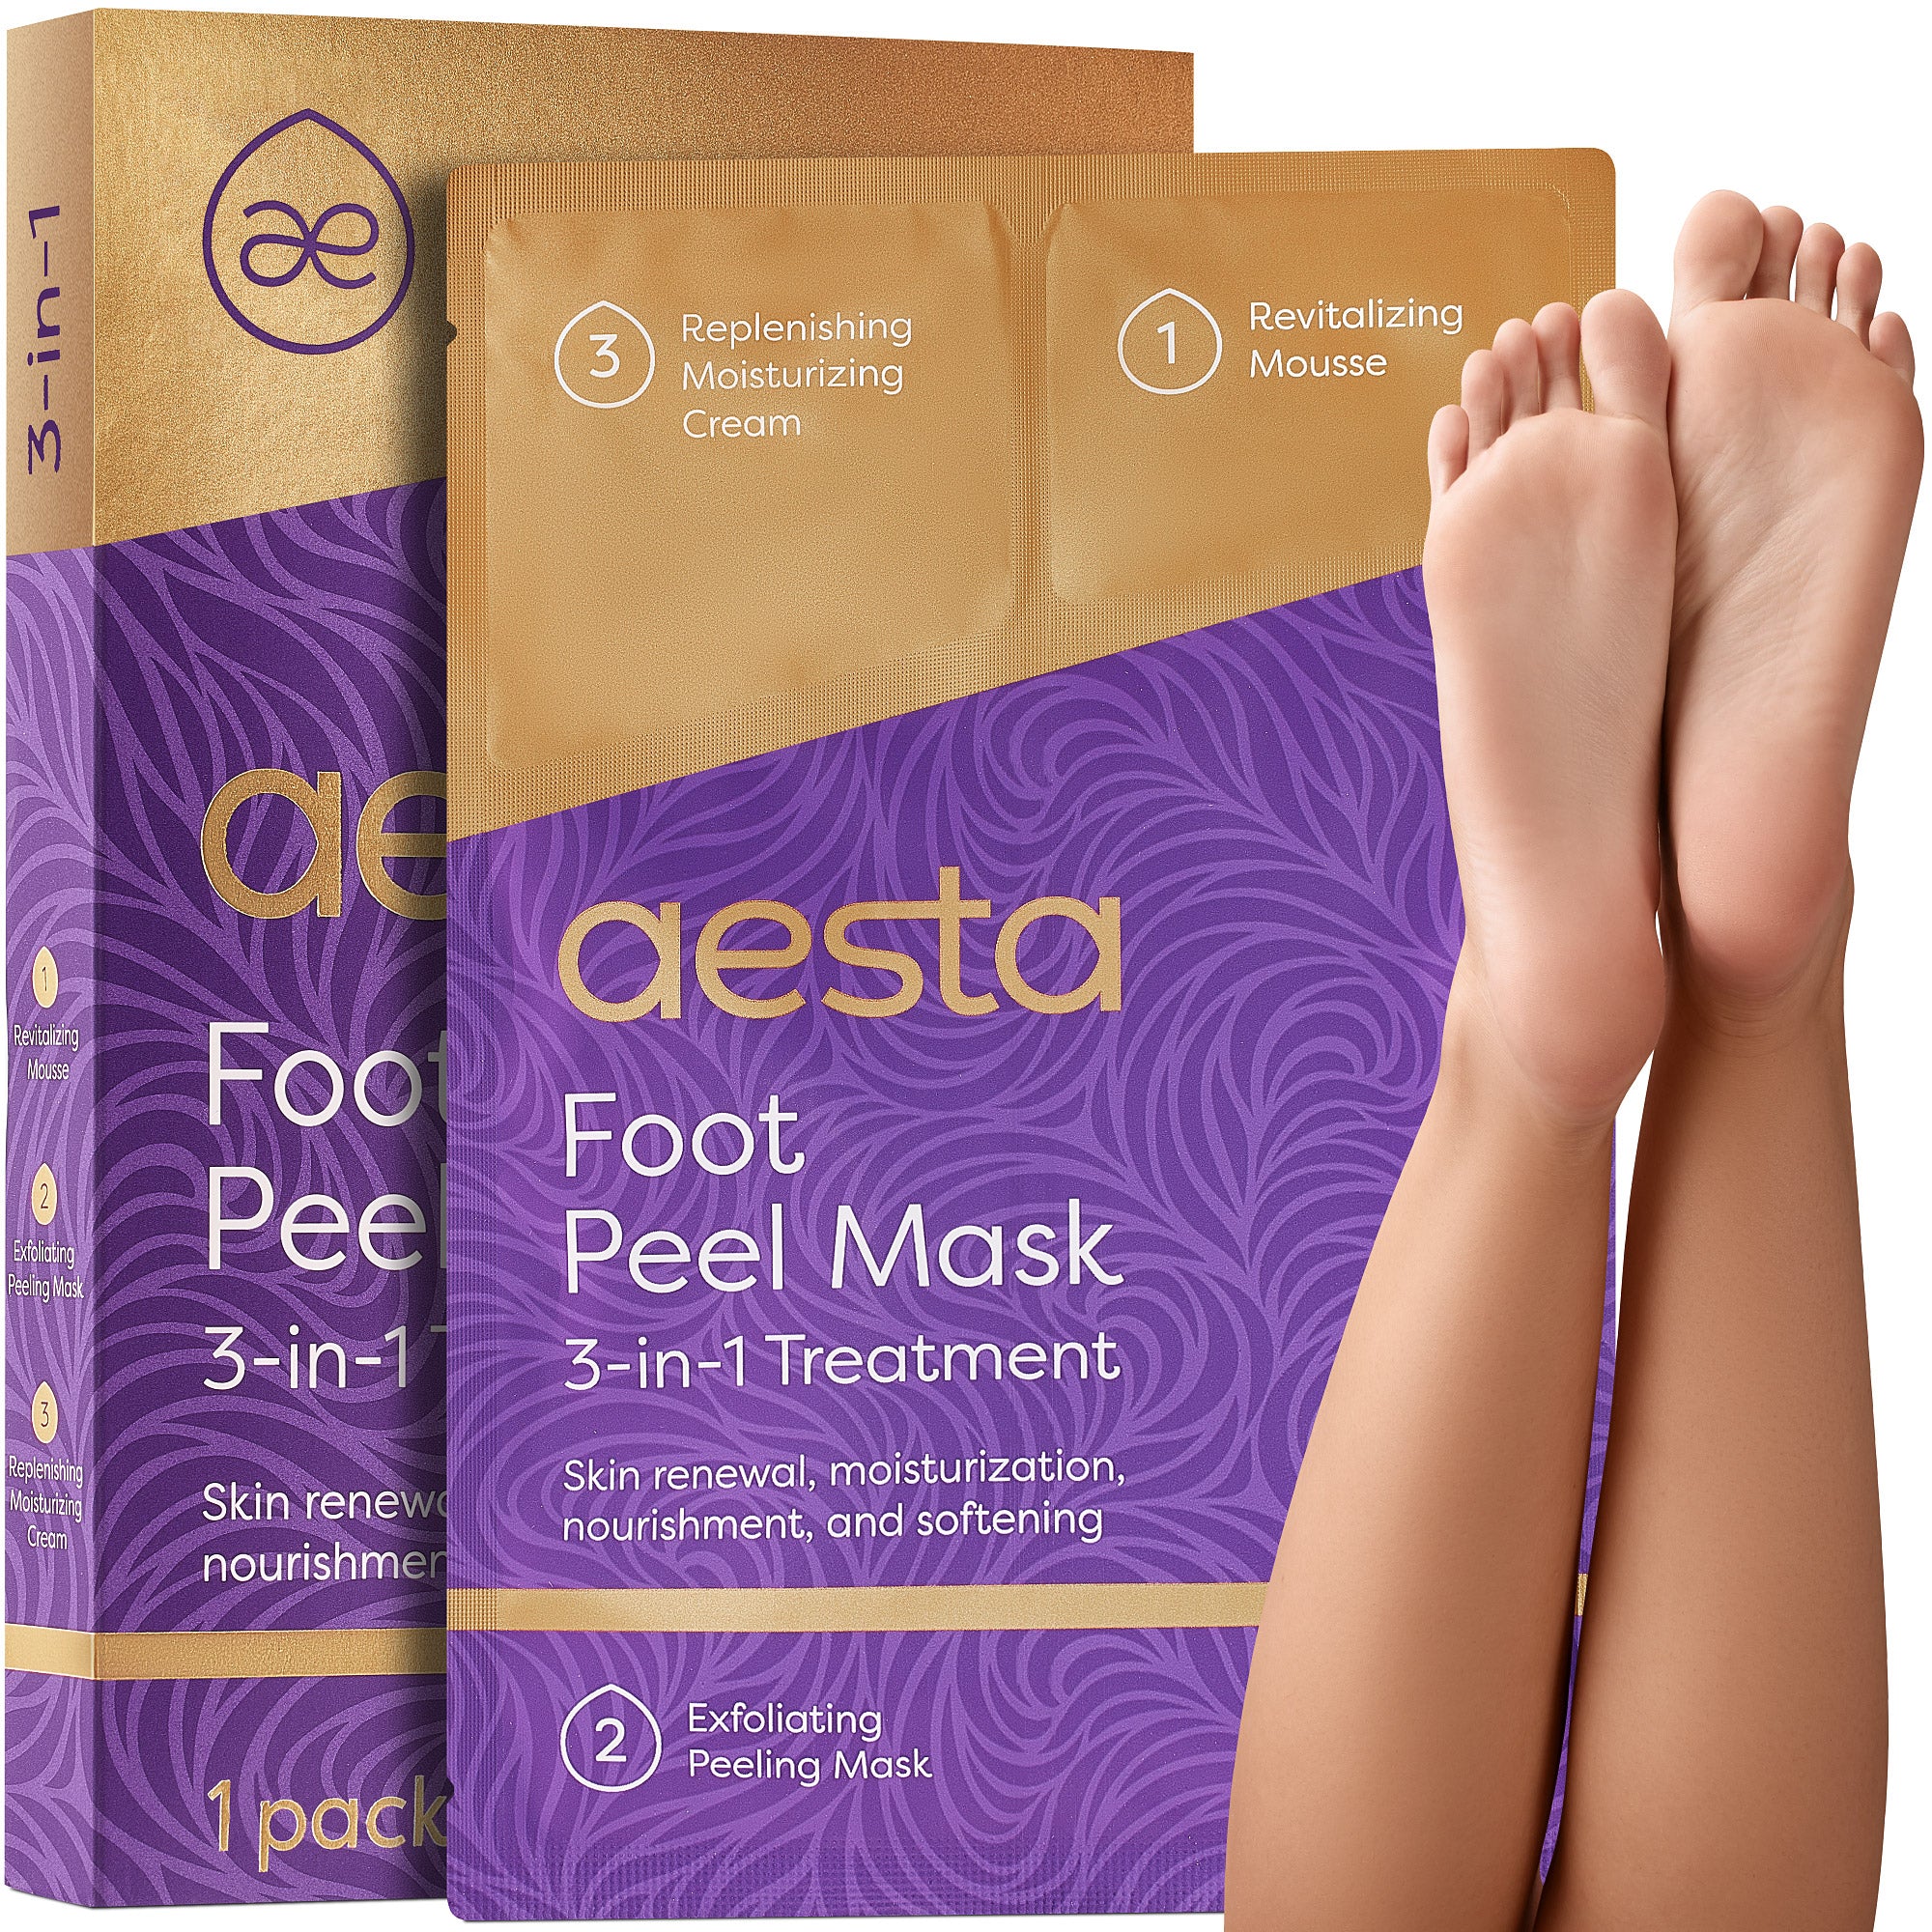 Aesta 3-in-1 Foot Peel Mask, Full-Cycle Foot Care: Revitalizing Mousse + Feet Peeling Mask + Moisturizing Cream | All-Natural Foot Peel Mask for Dry Cracked Feet | Baby Feet Foot Peel Treatment Set